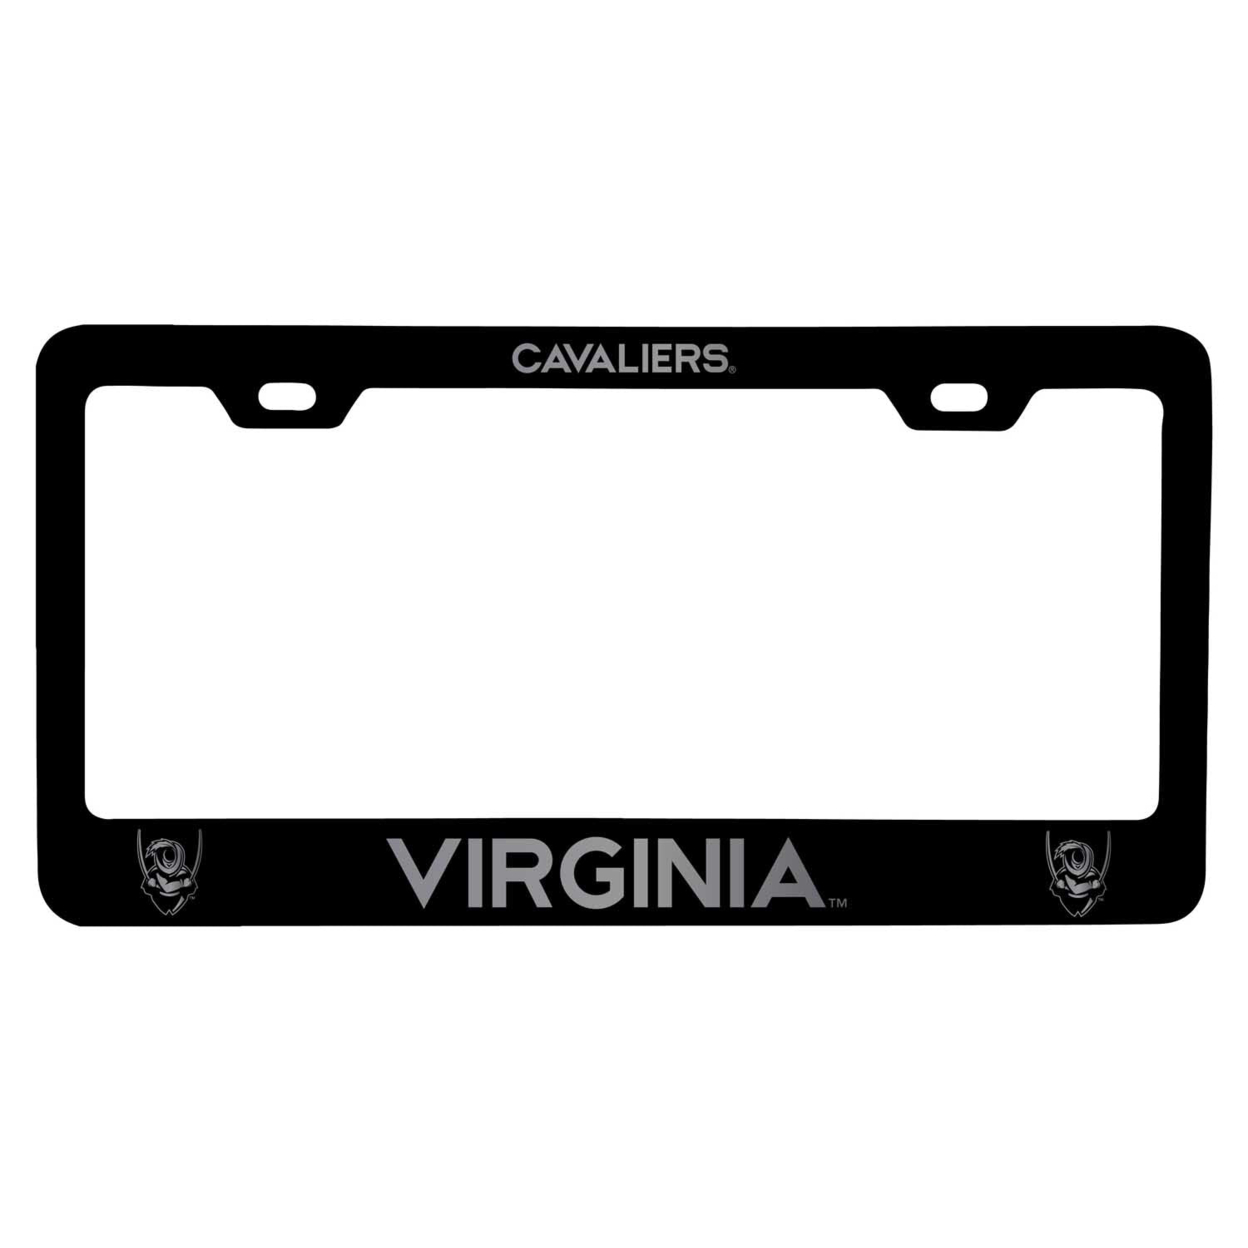 Virginia Cavaliers Laser Engraved Metal License Plate Frame - Choose Your Color - Black